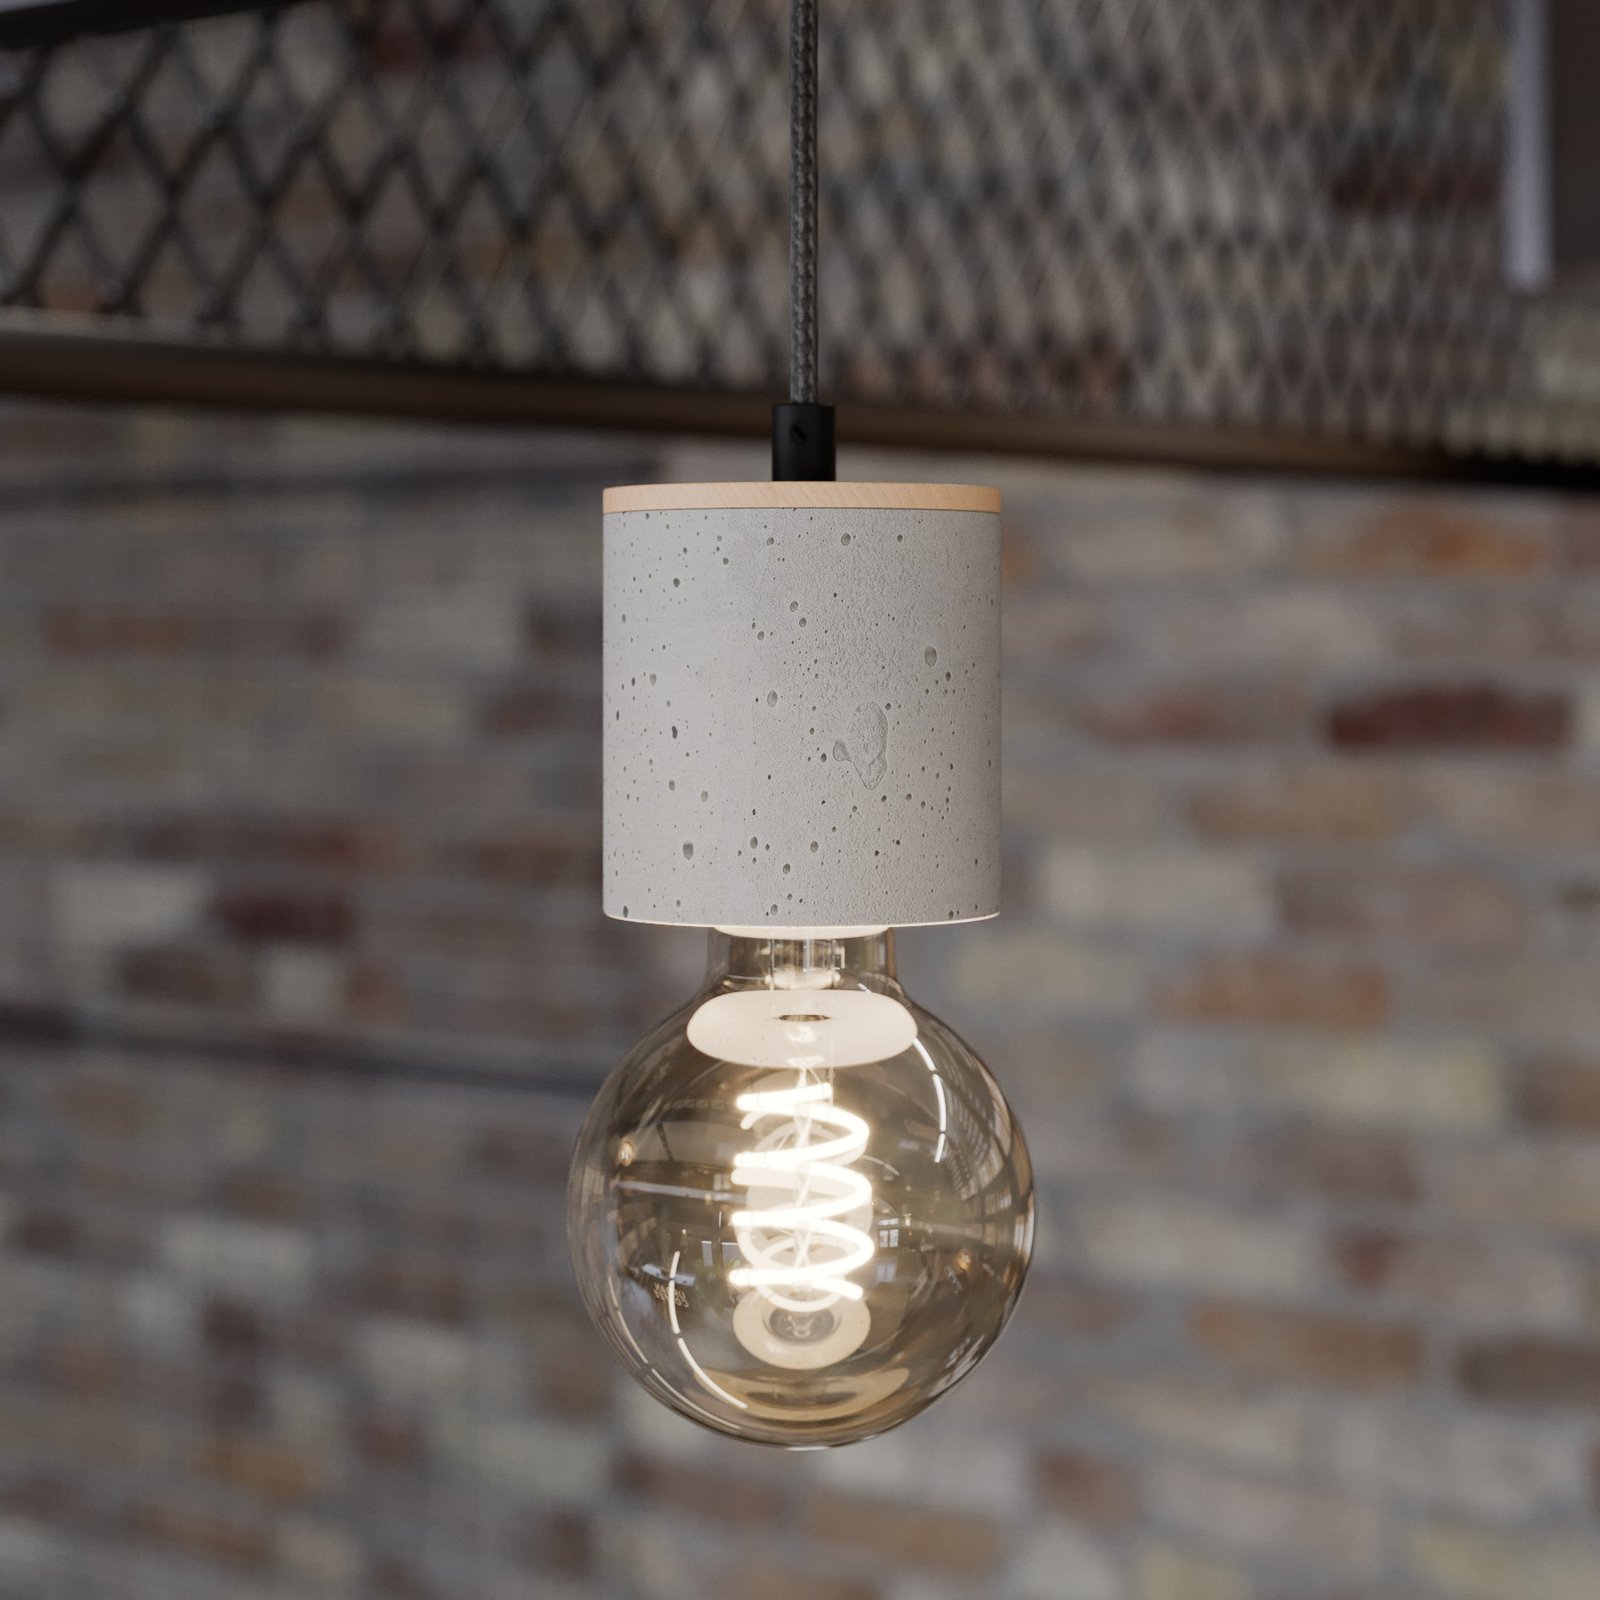 Envolight Jasper hanging lamp, oak/concrete 1-bulb